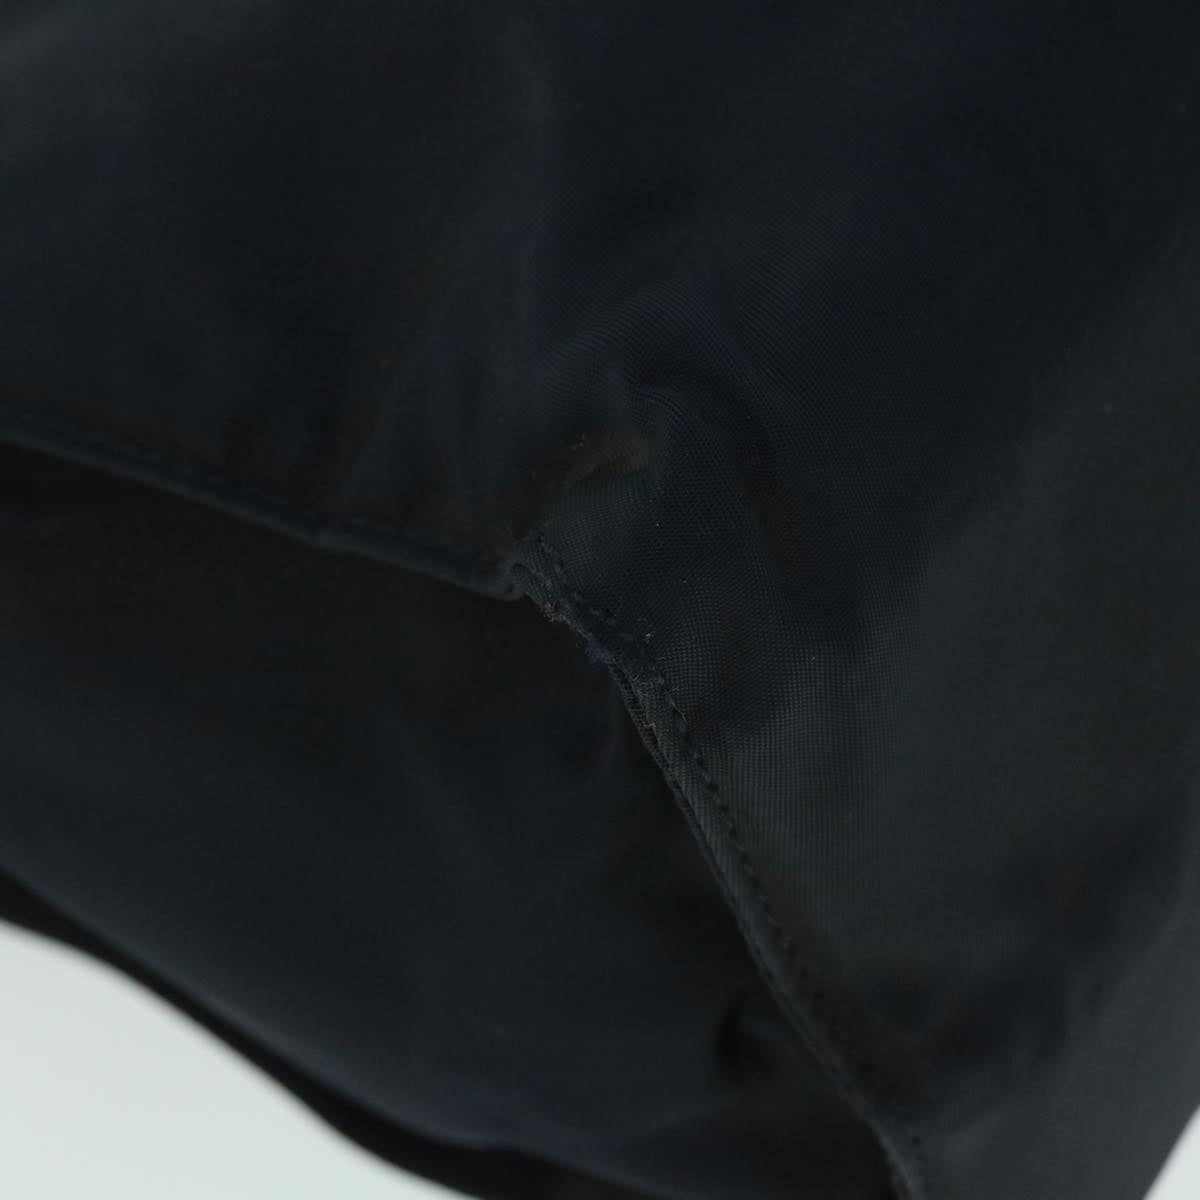 PRADA Hand Bag Nylon Leather Navy Black Auth bs8105